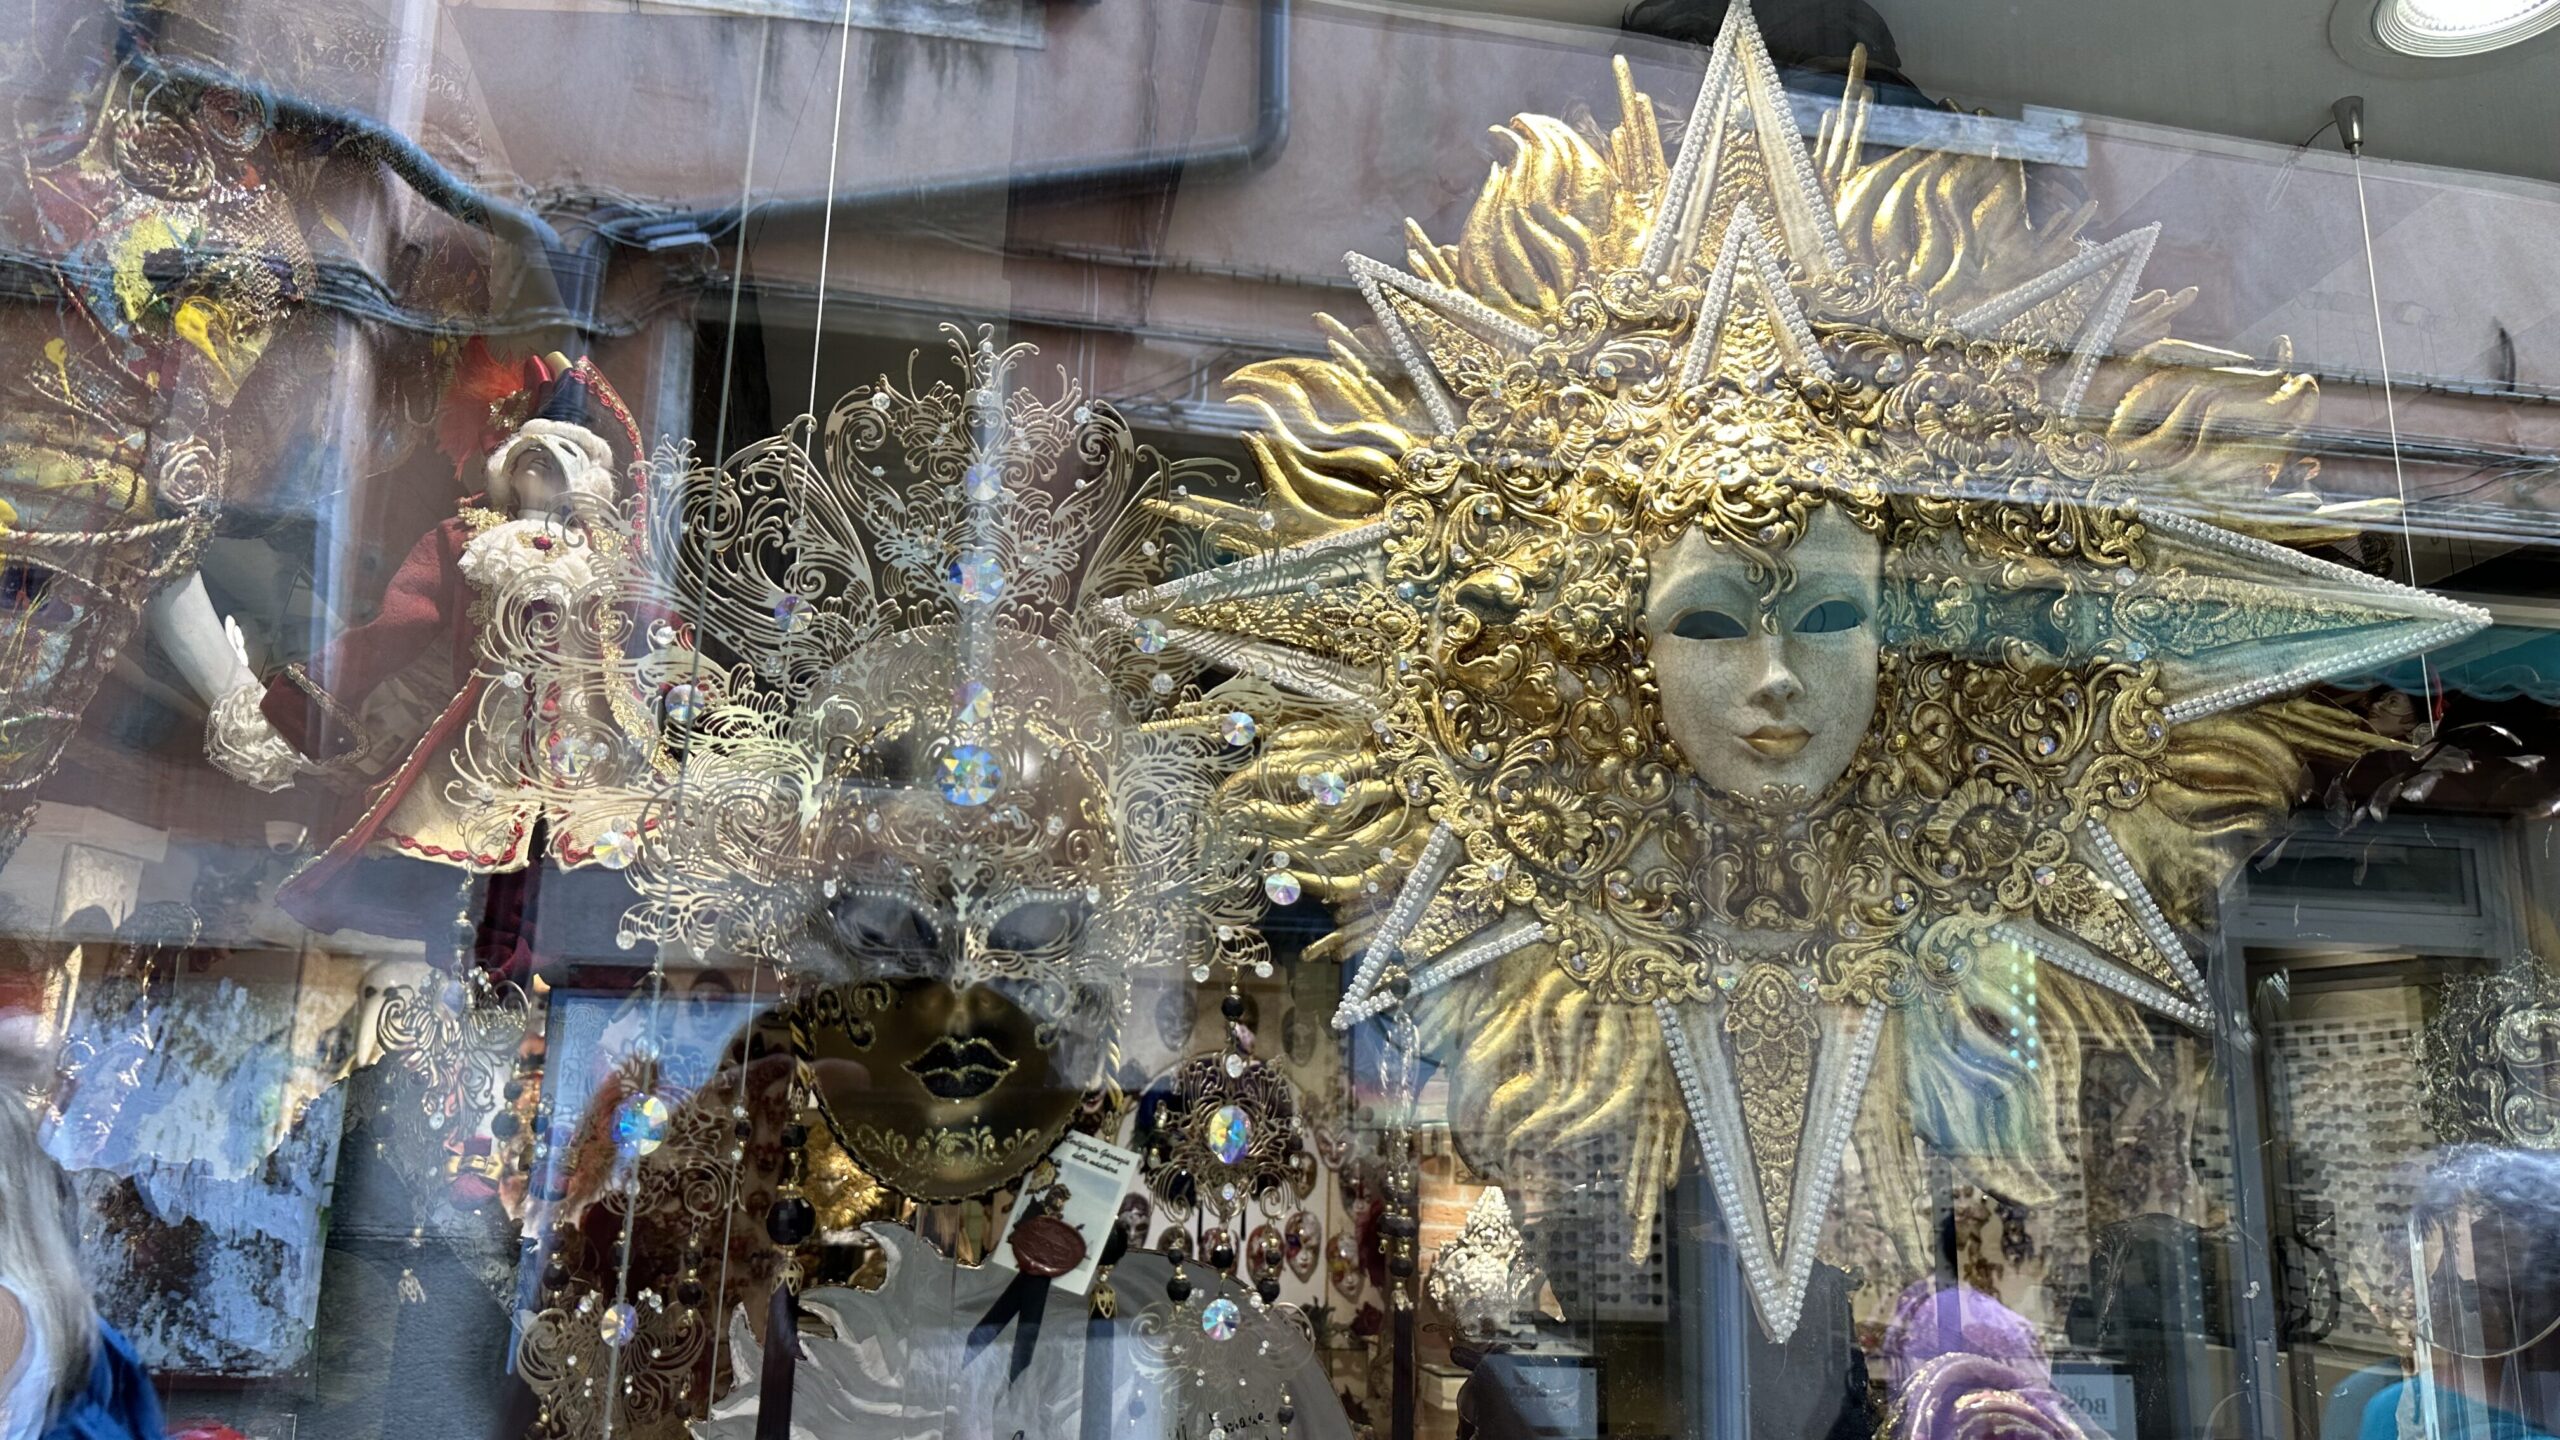 Elaborate Venetian Carnaval masks in a shop window in Venice